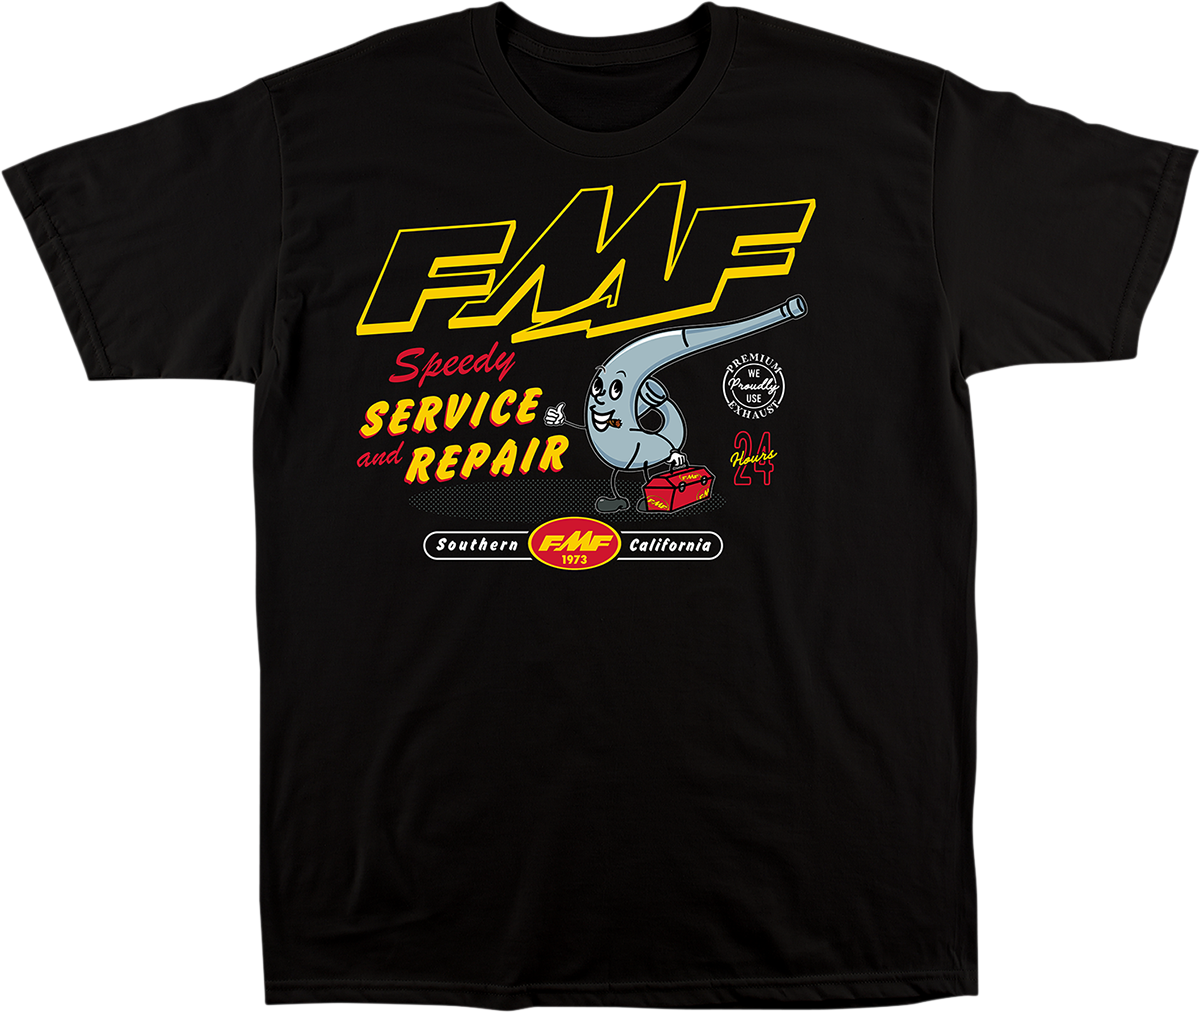 FMF Expert Service T-Shirt - Black - Small FA21118913BKSM 3030-21307